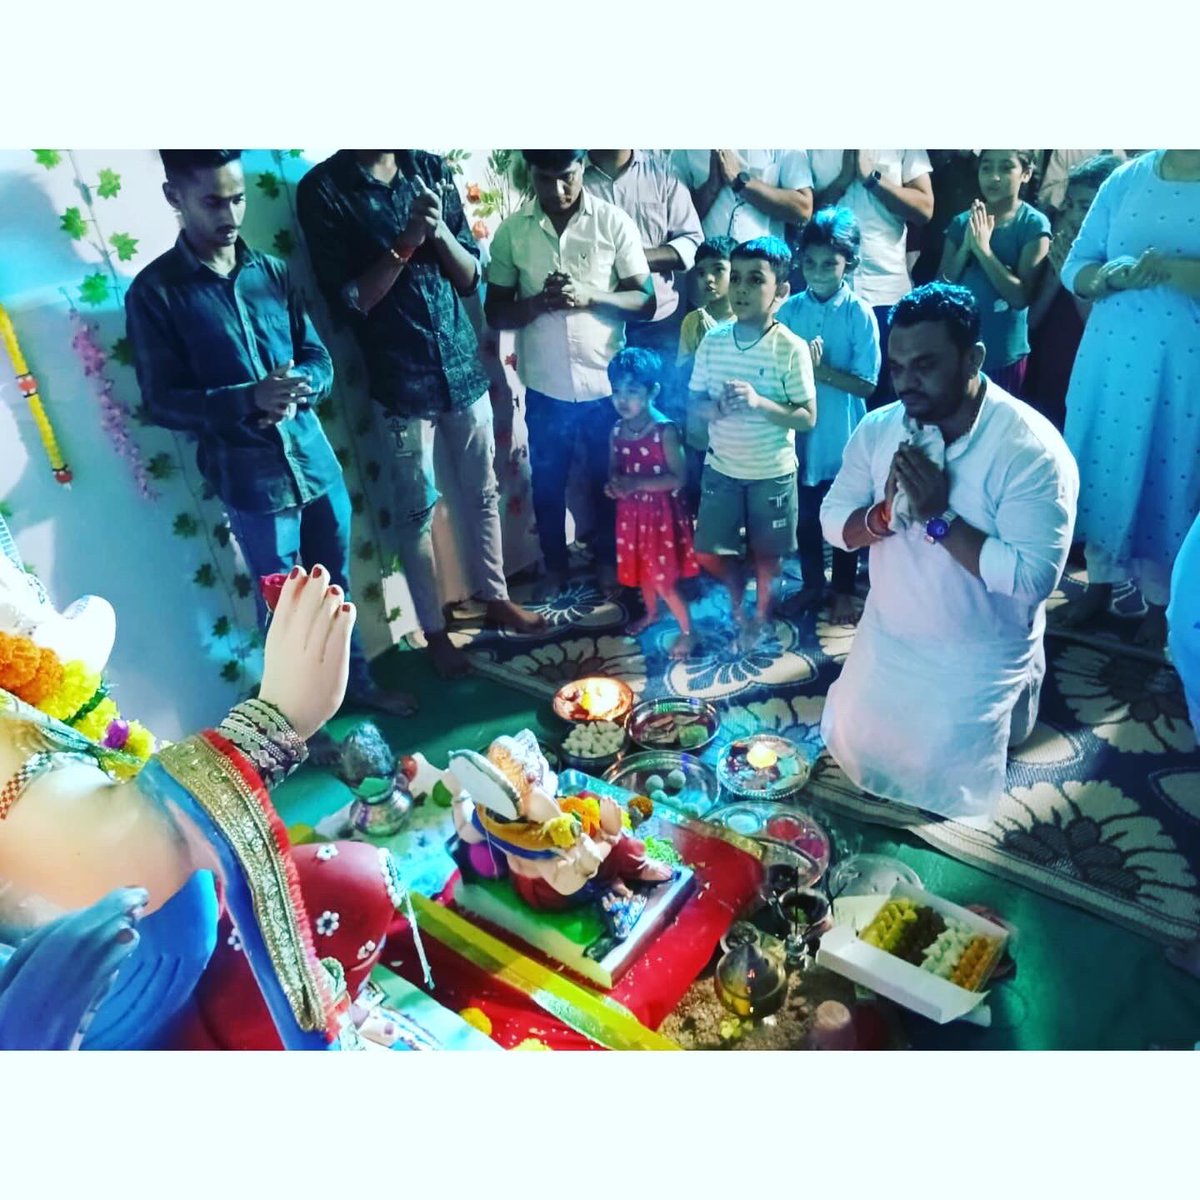 'Seeking the divine blessings of Ganpati Bappa at Jala Ram Society, Rakholi. 🙏#GanpatiBlessings #DivineGuidance'